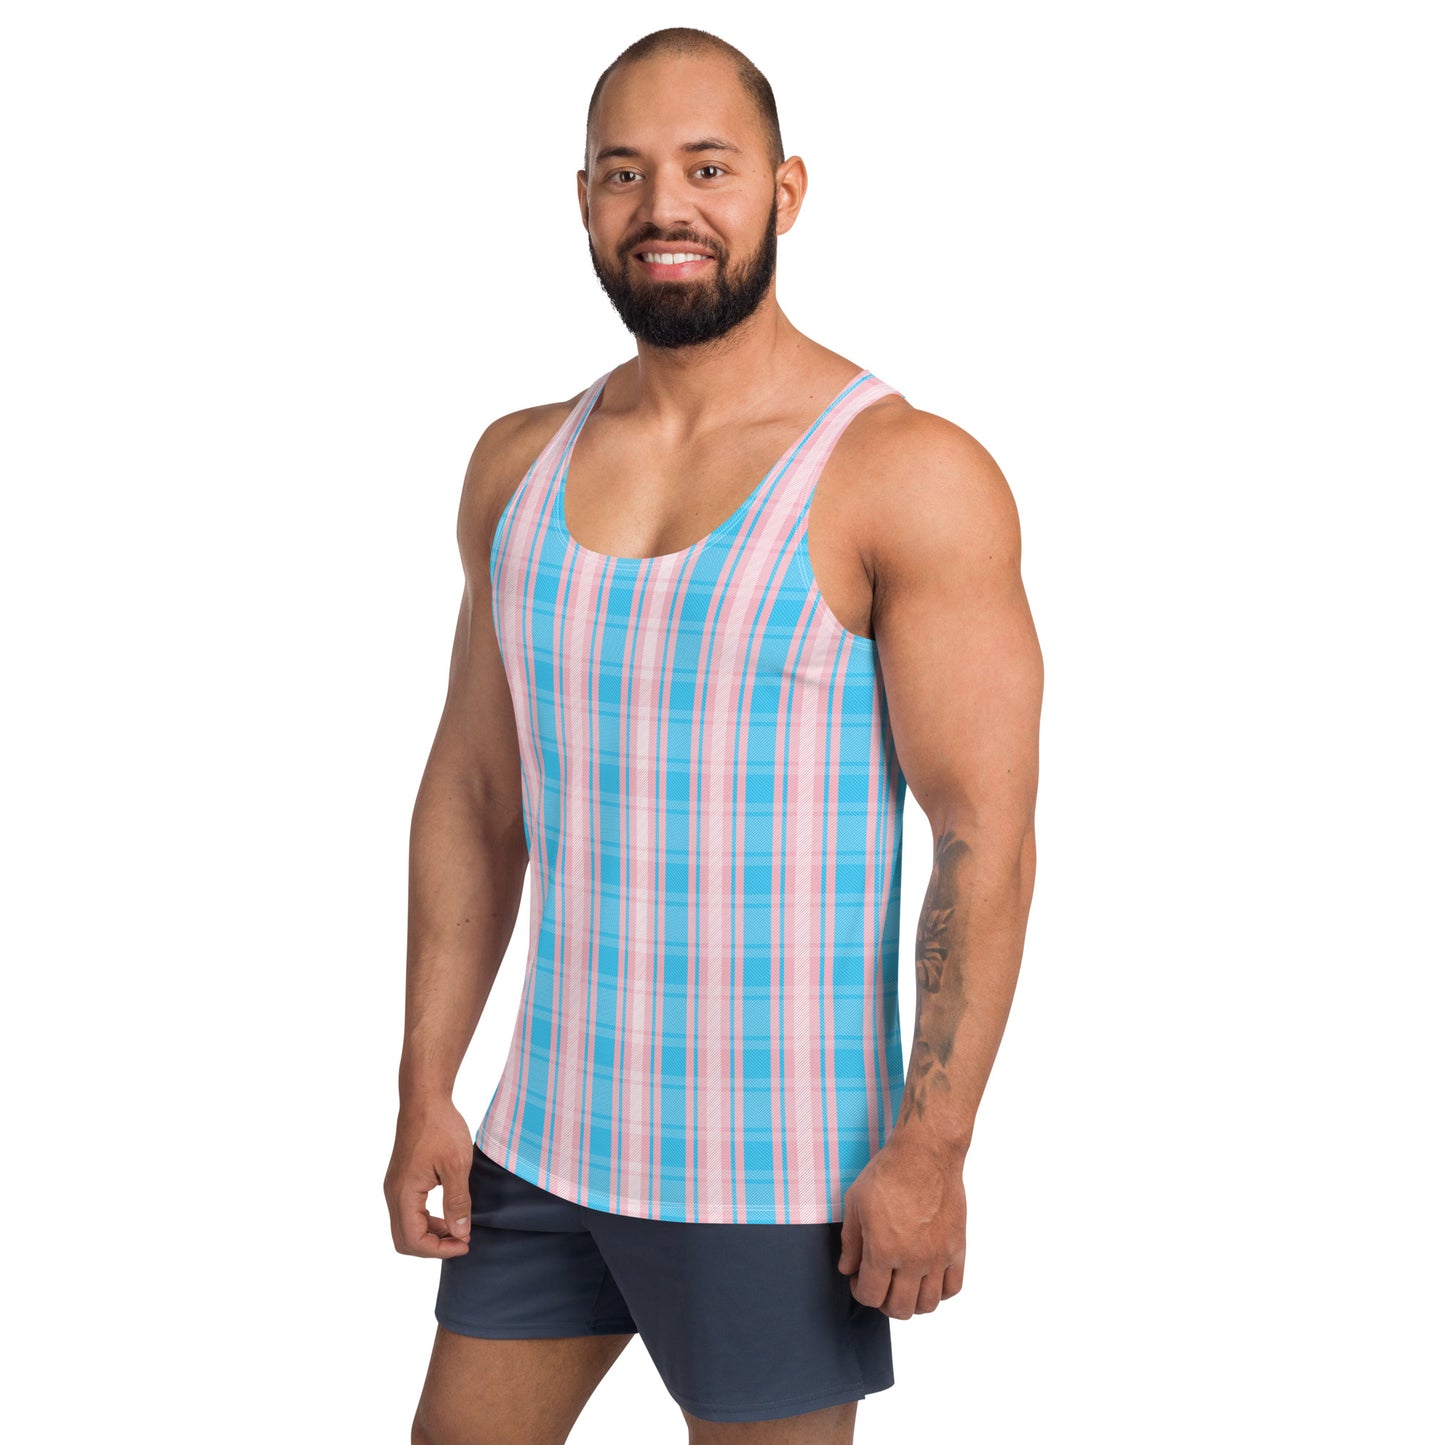 Transgender Pride Plaid Unisex Tank Top - LGBTQIA Pink White Blue Trans Flag Shirt - Parade Club Running